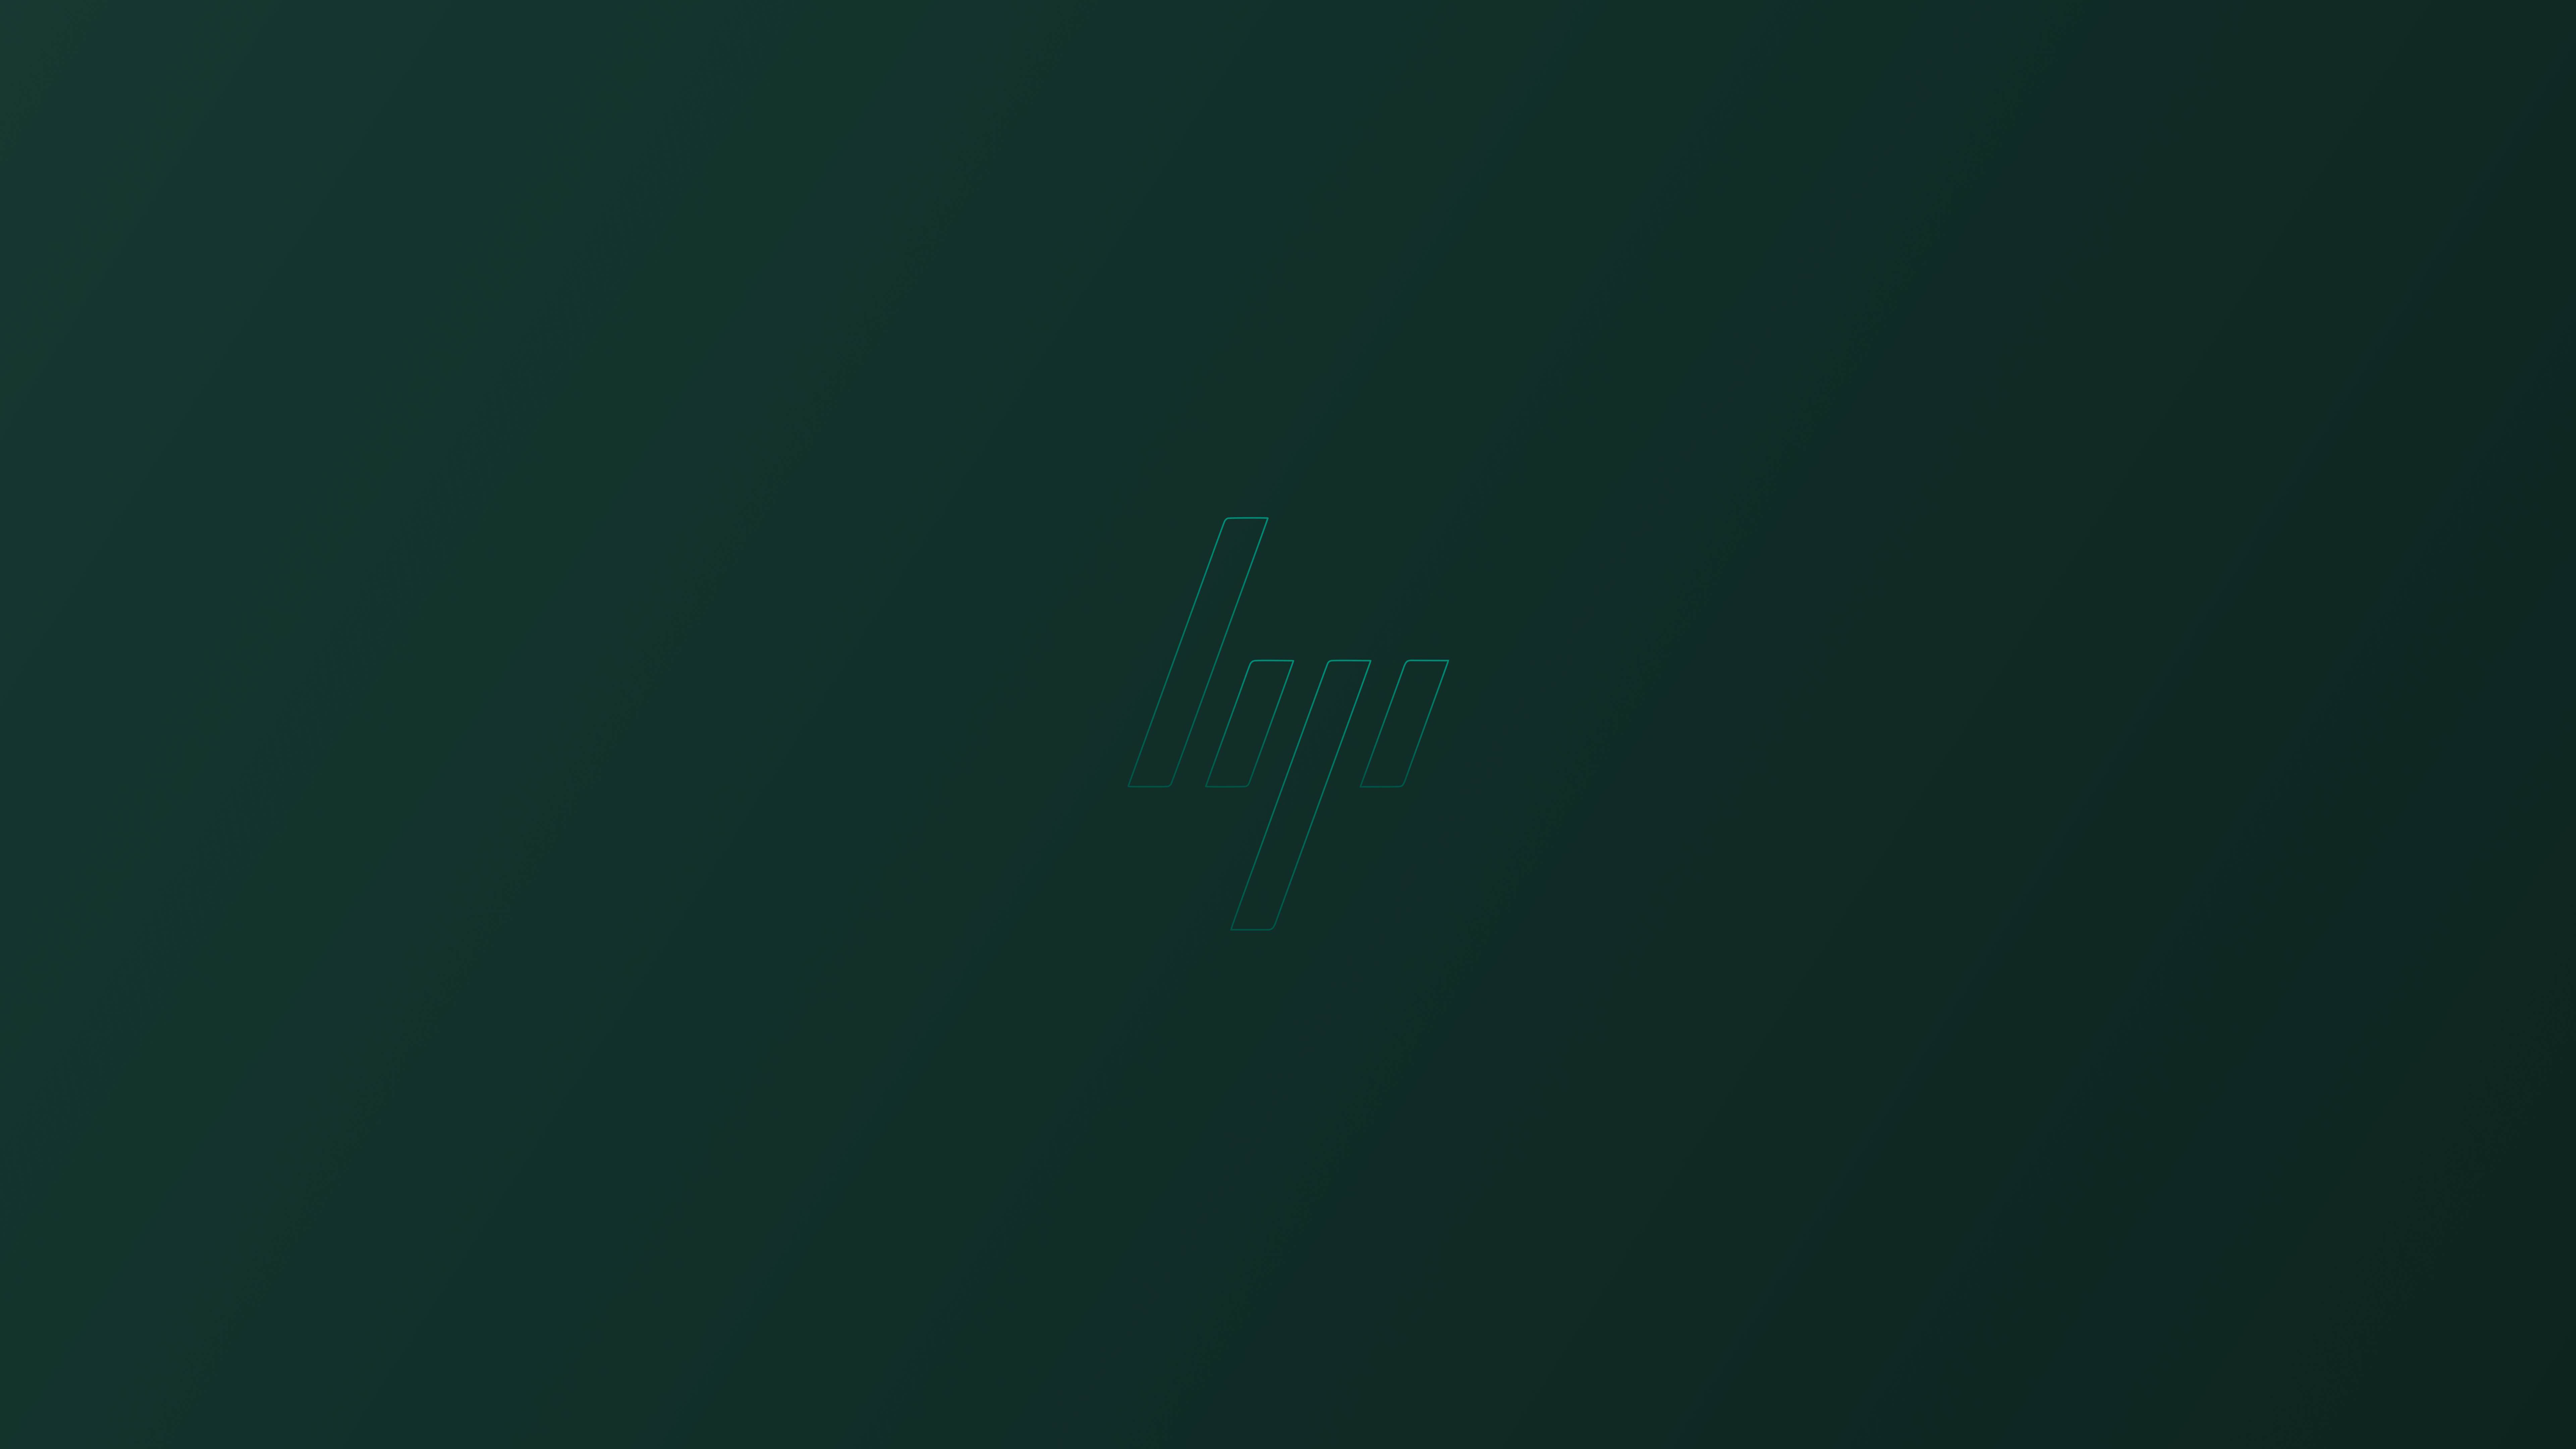 General 7680x4320 minimalism Hewlett Packard brand logo green background digital art simple background